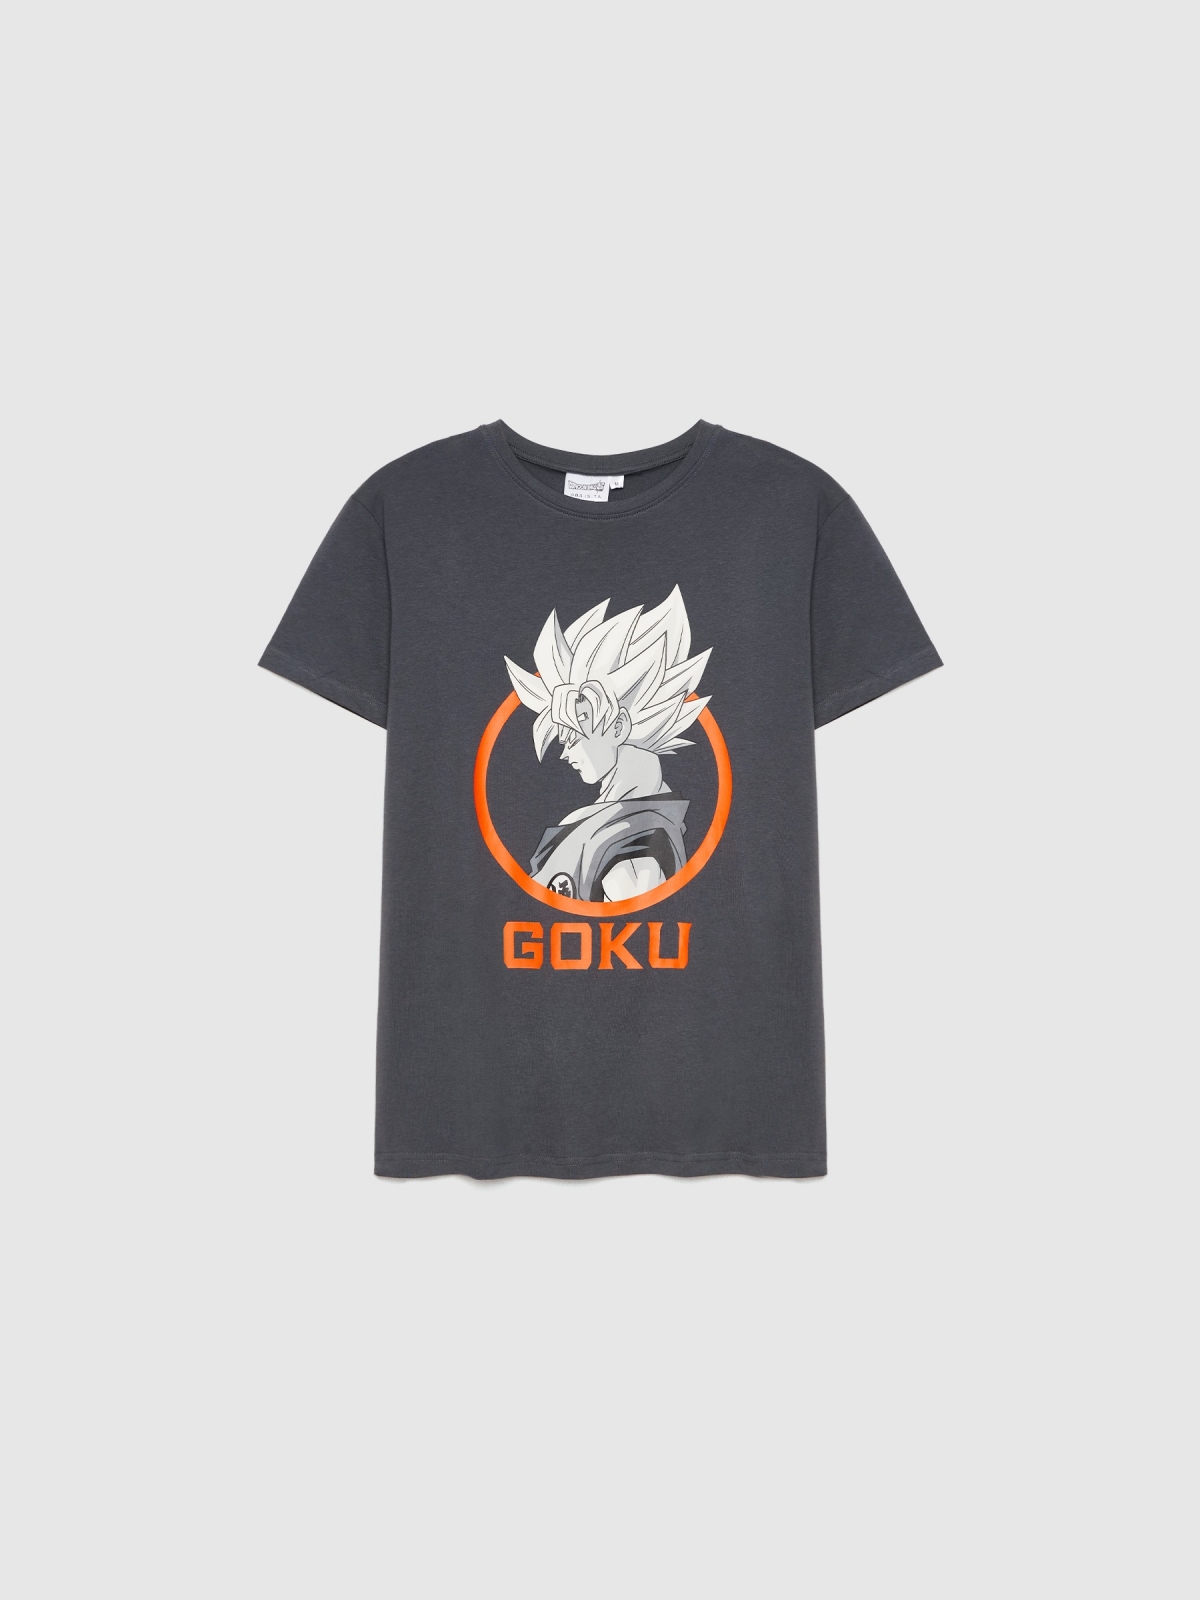  Camiseta manga corta Goku gris oscuro